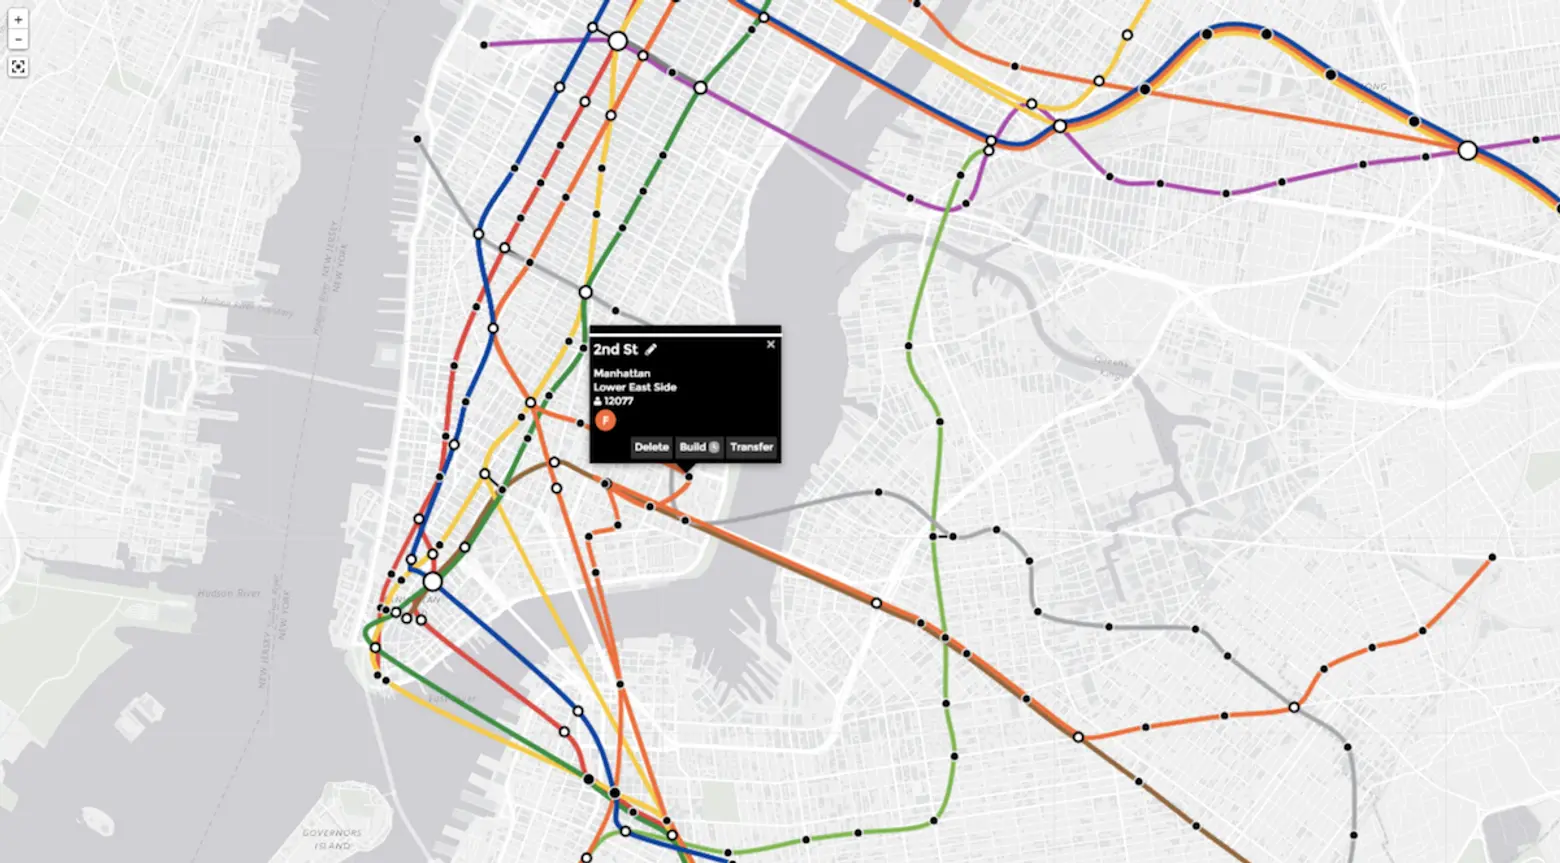 Brand New subway, subway map, robert moses, jason wright, maps, interactive games, urban planning, transit system, mta